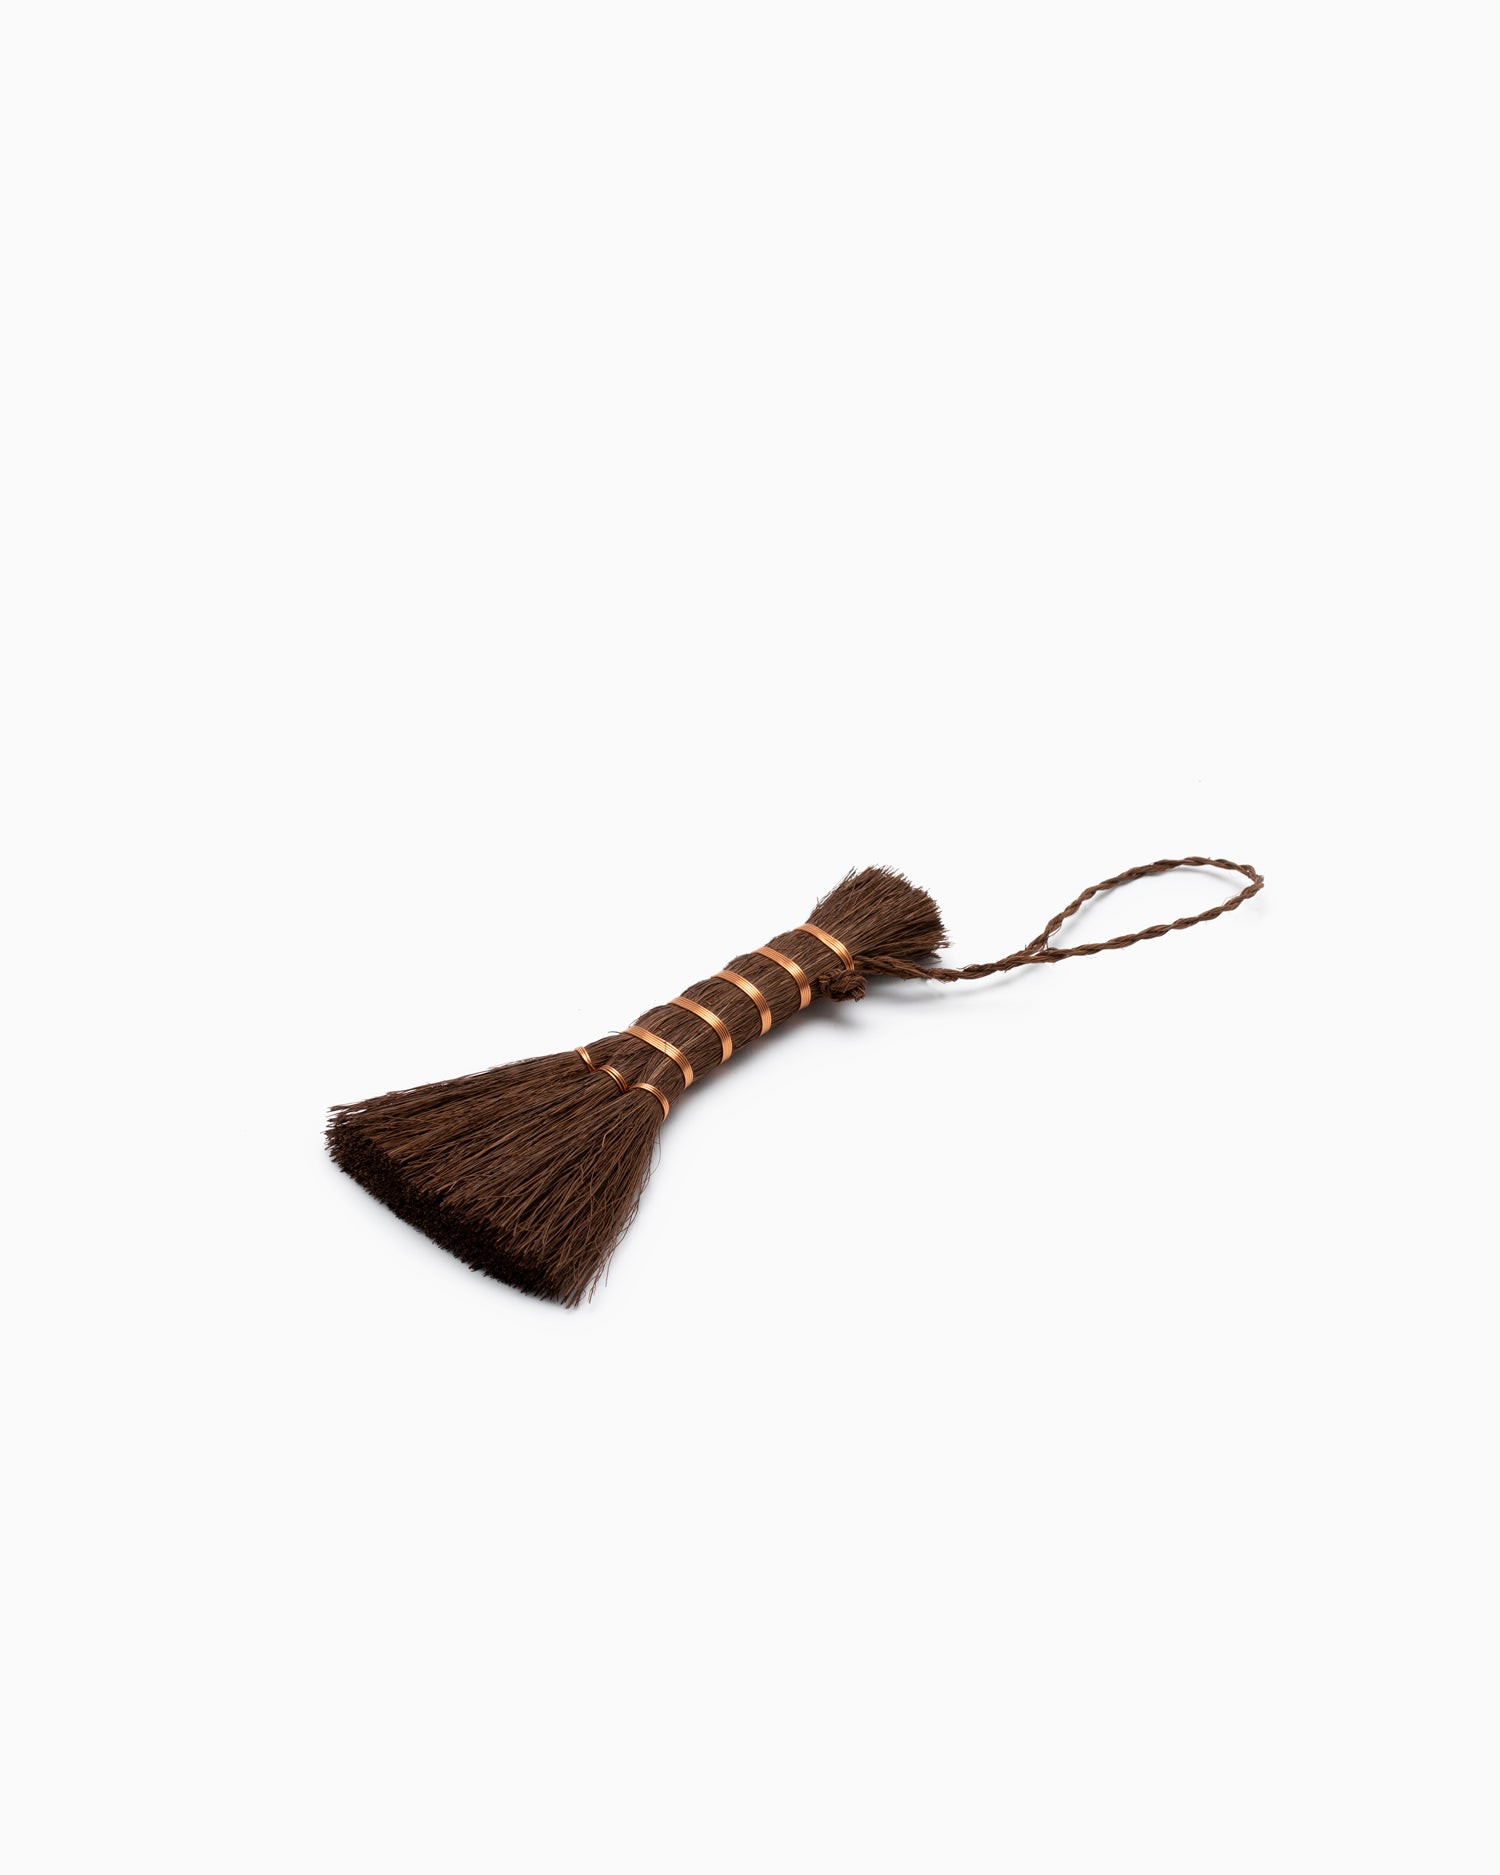 Small Kojin Broom